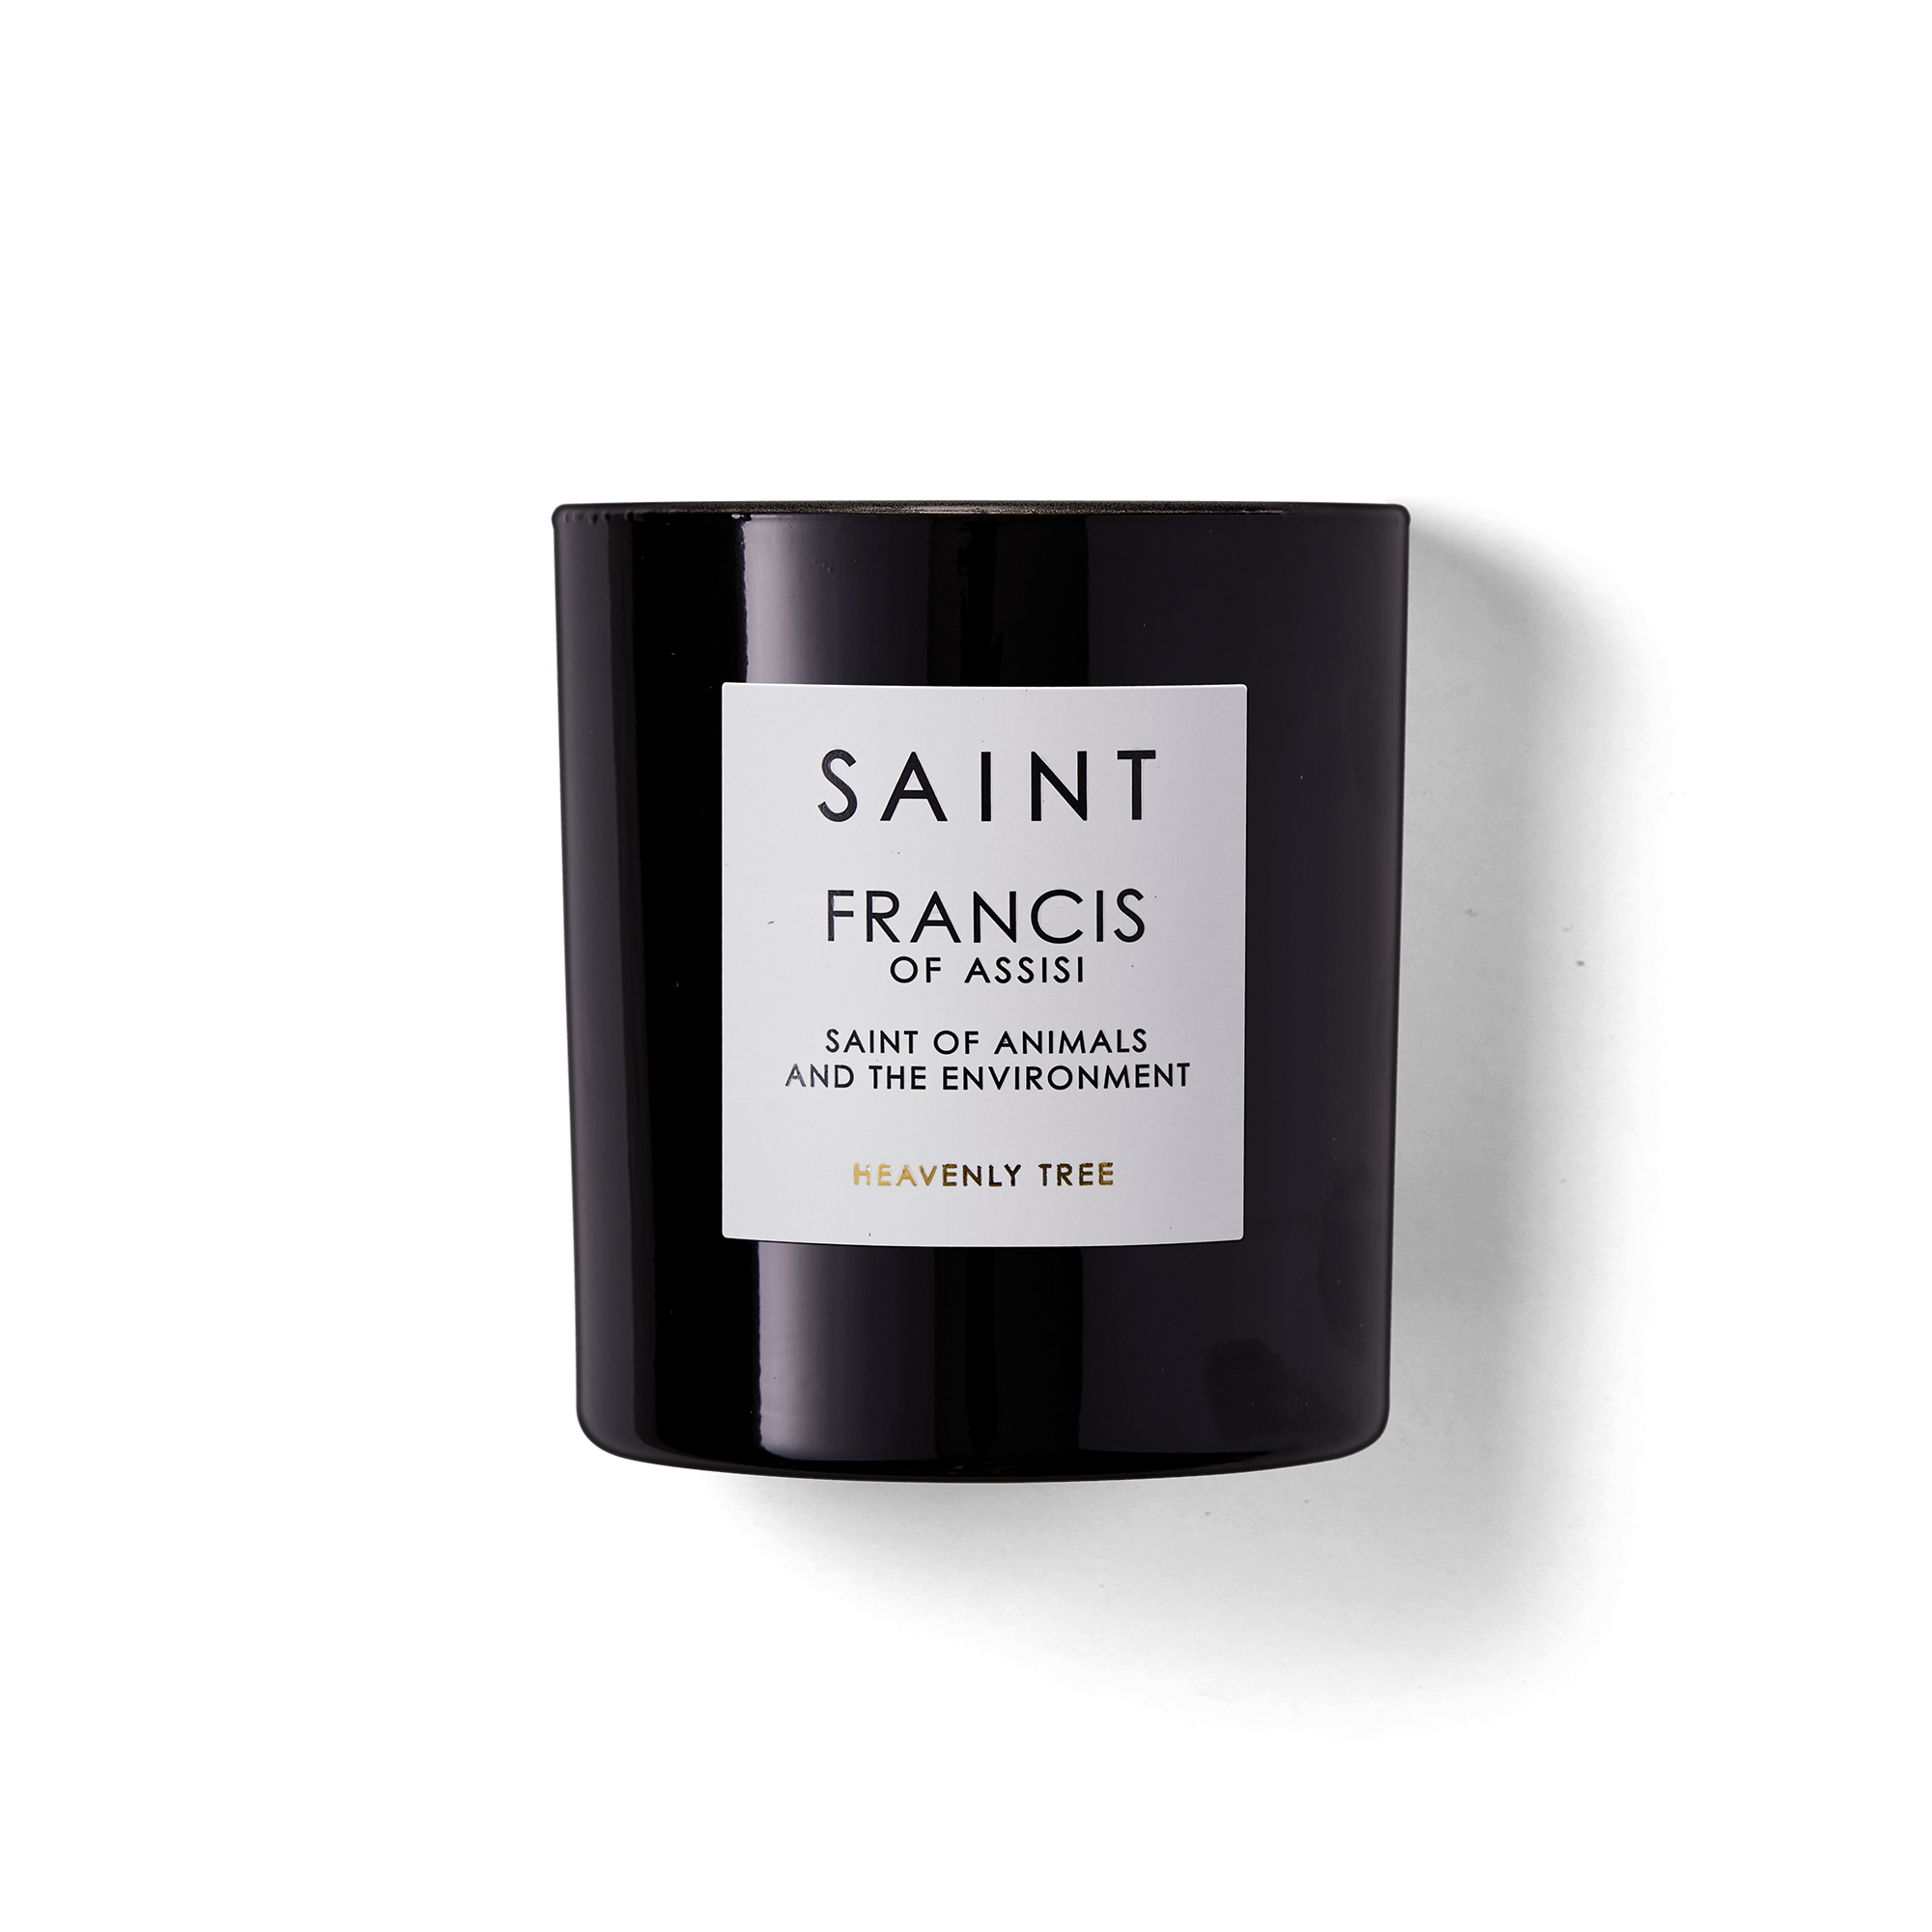 Saint Francis of Assisi – SAINT Candles